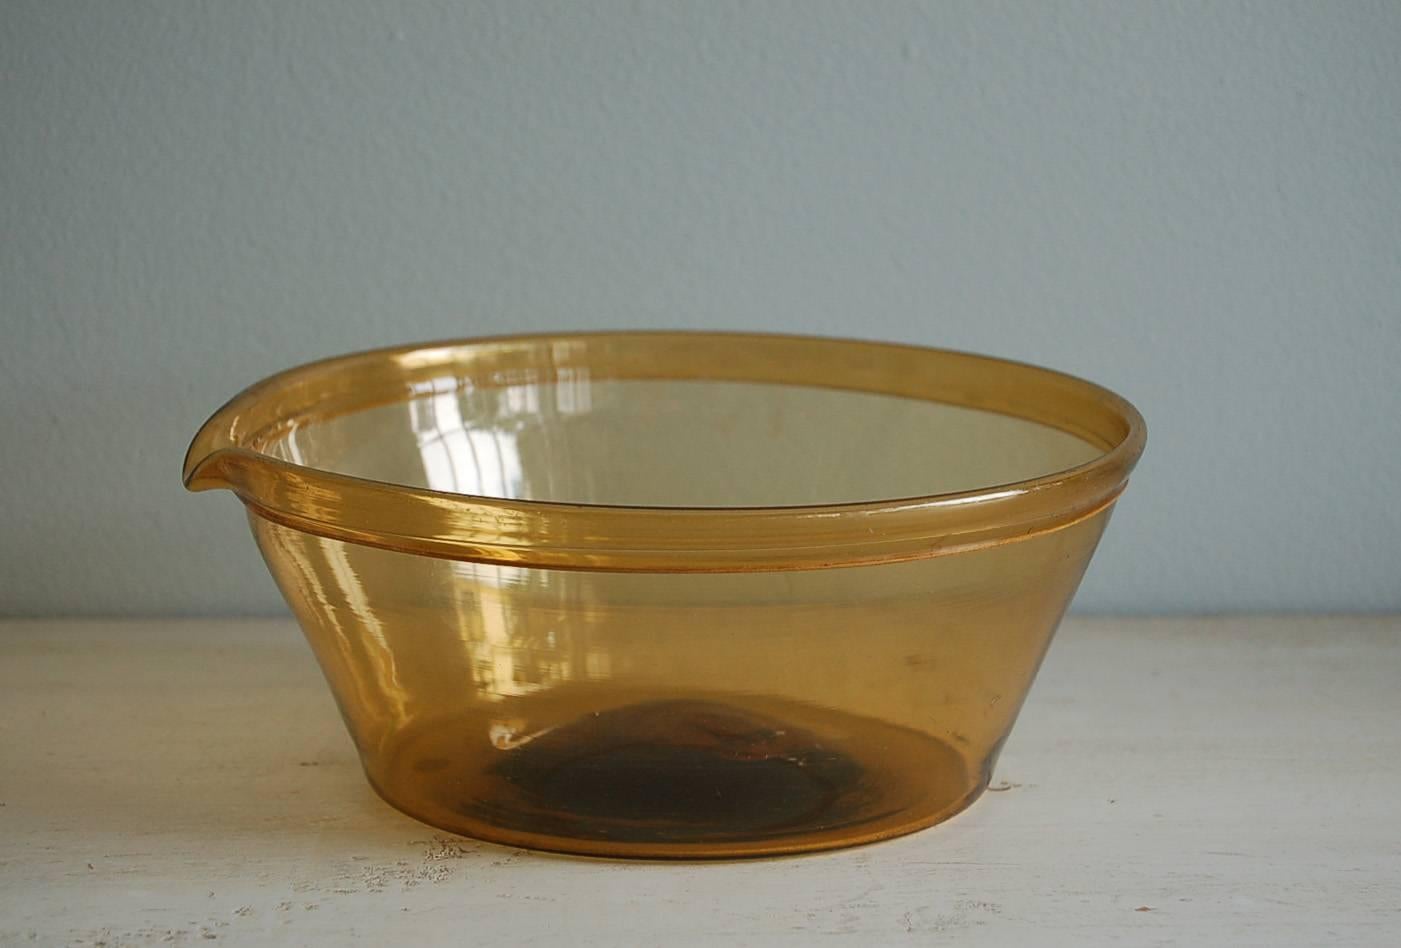 Swedish yellow 18th century Gustavian handblown glass milk bowl with pouring spout, circa 1780, origin: Sweden.